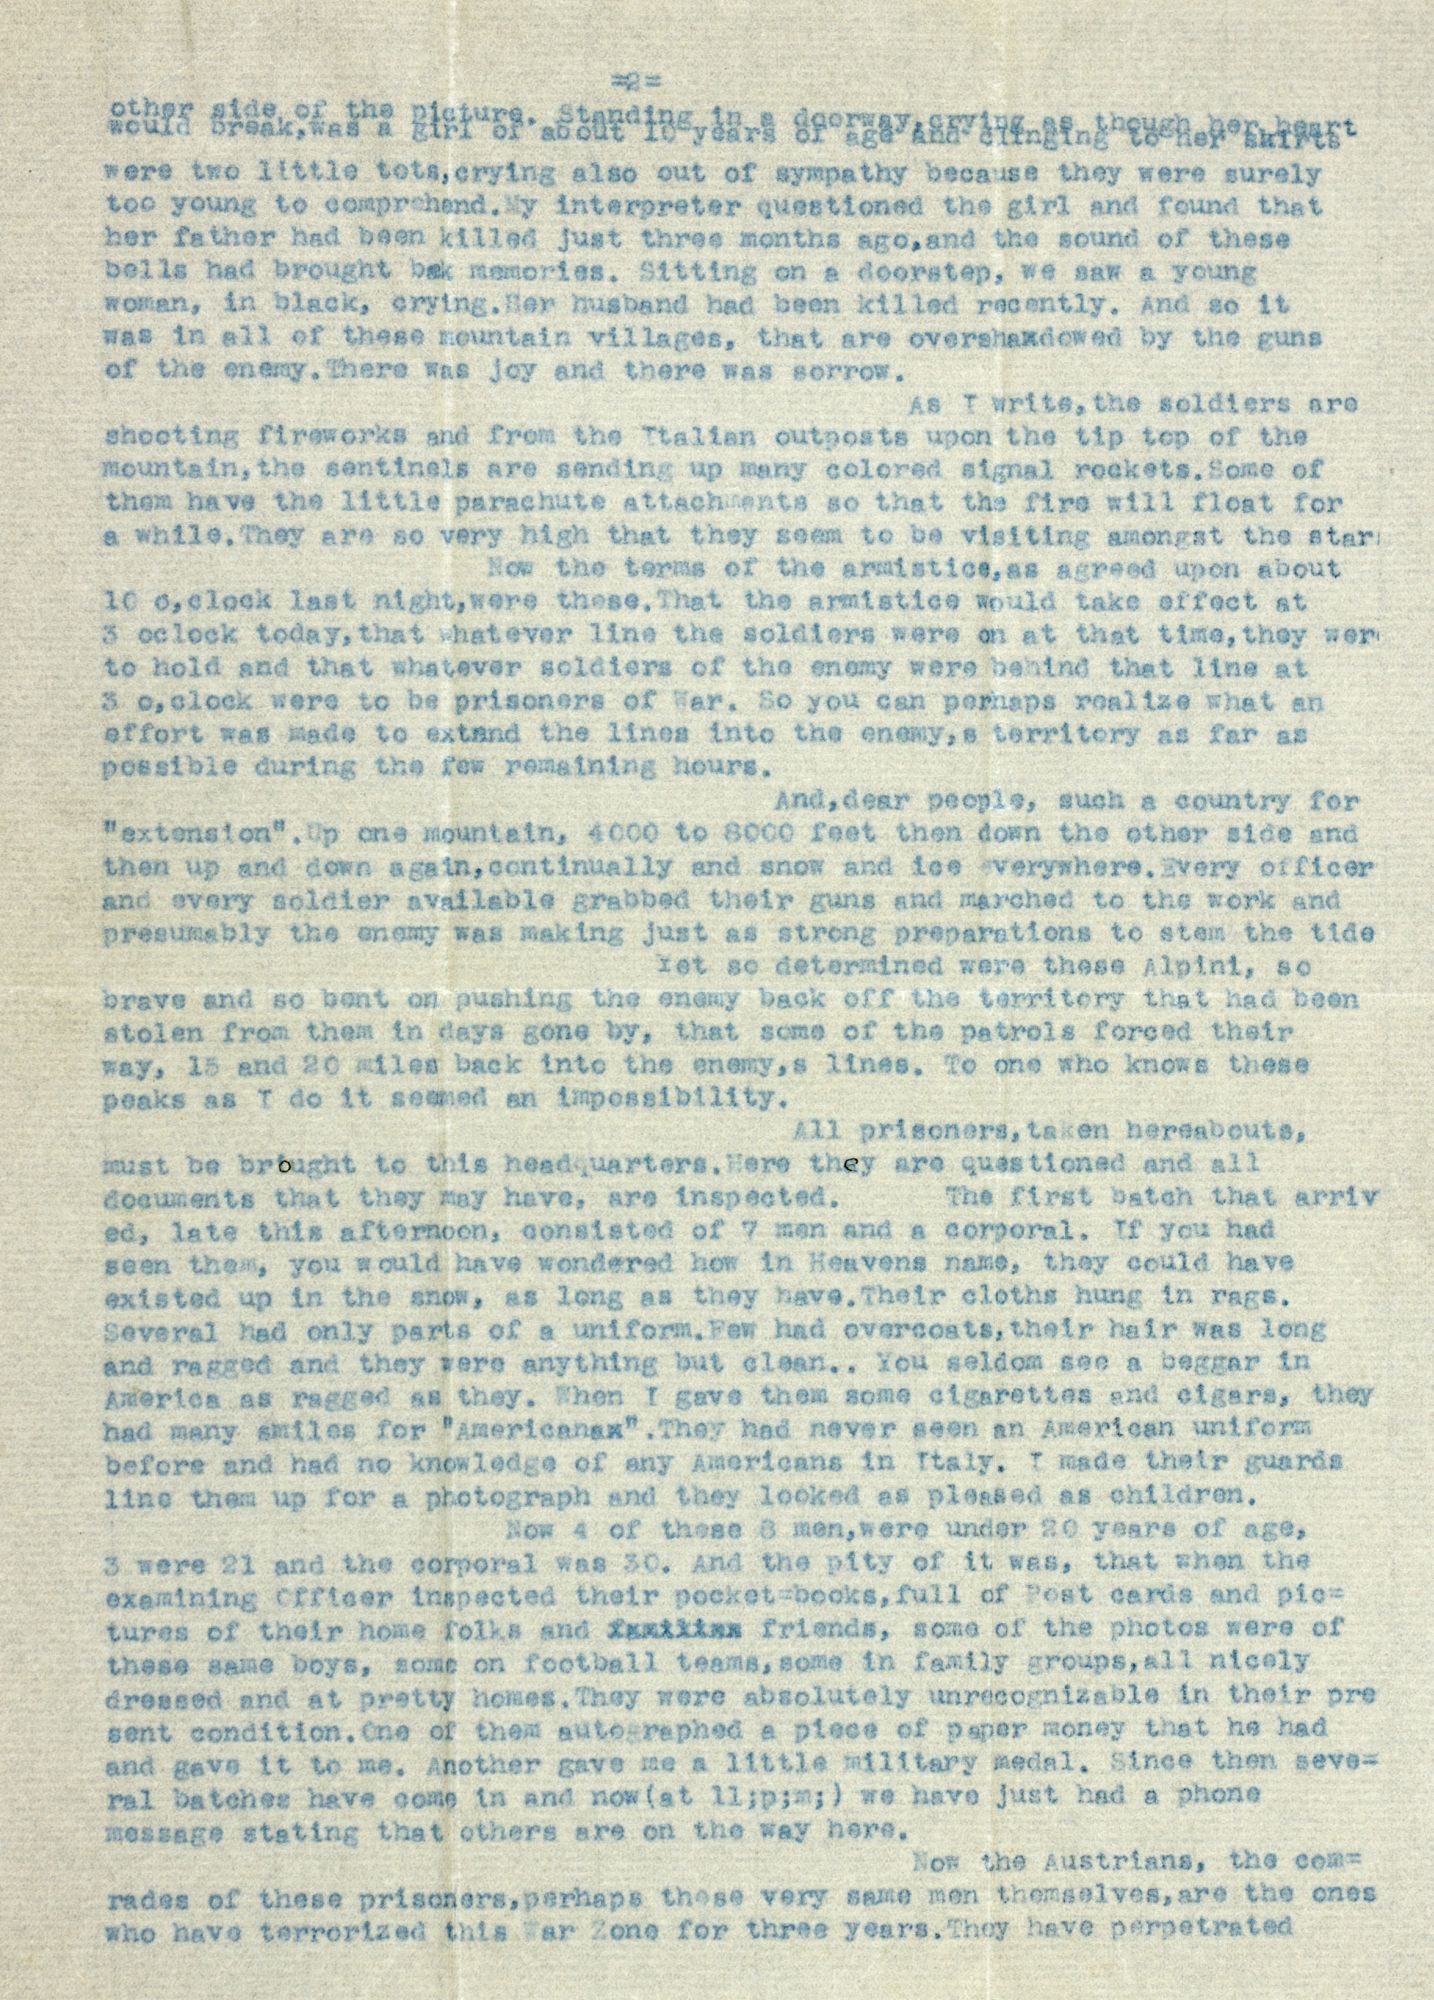 Friedman letter page 2